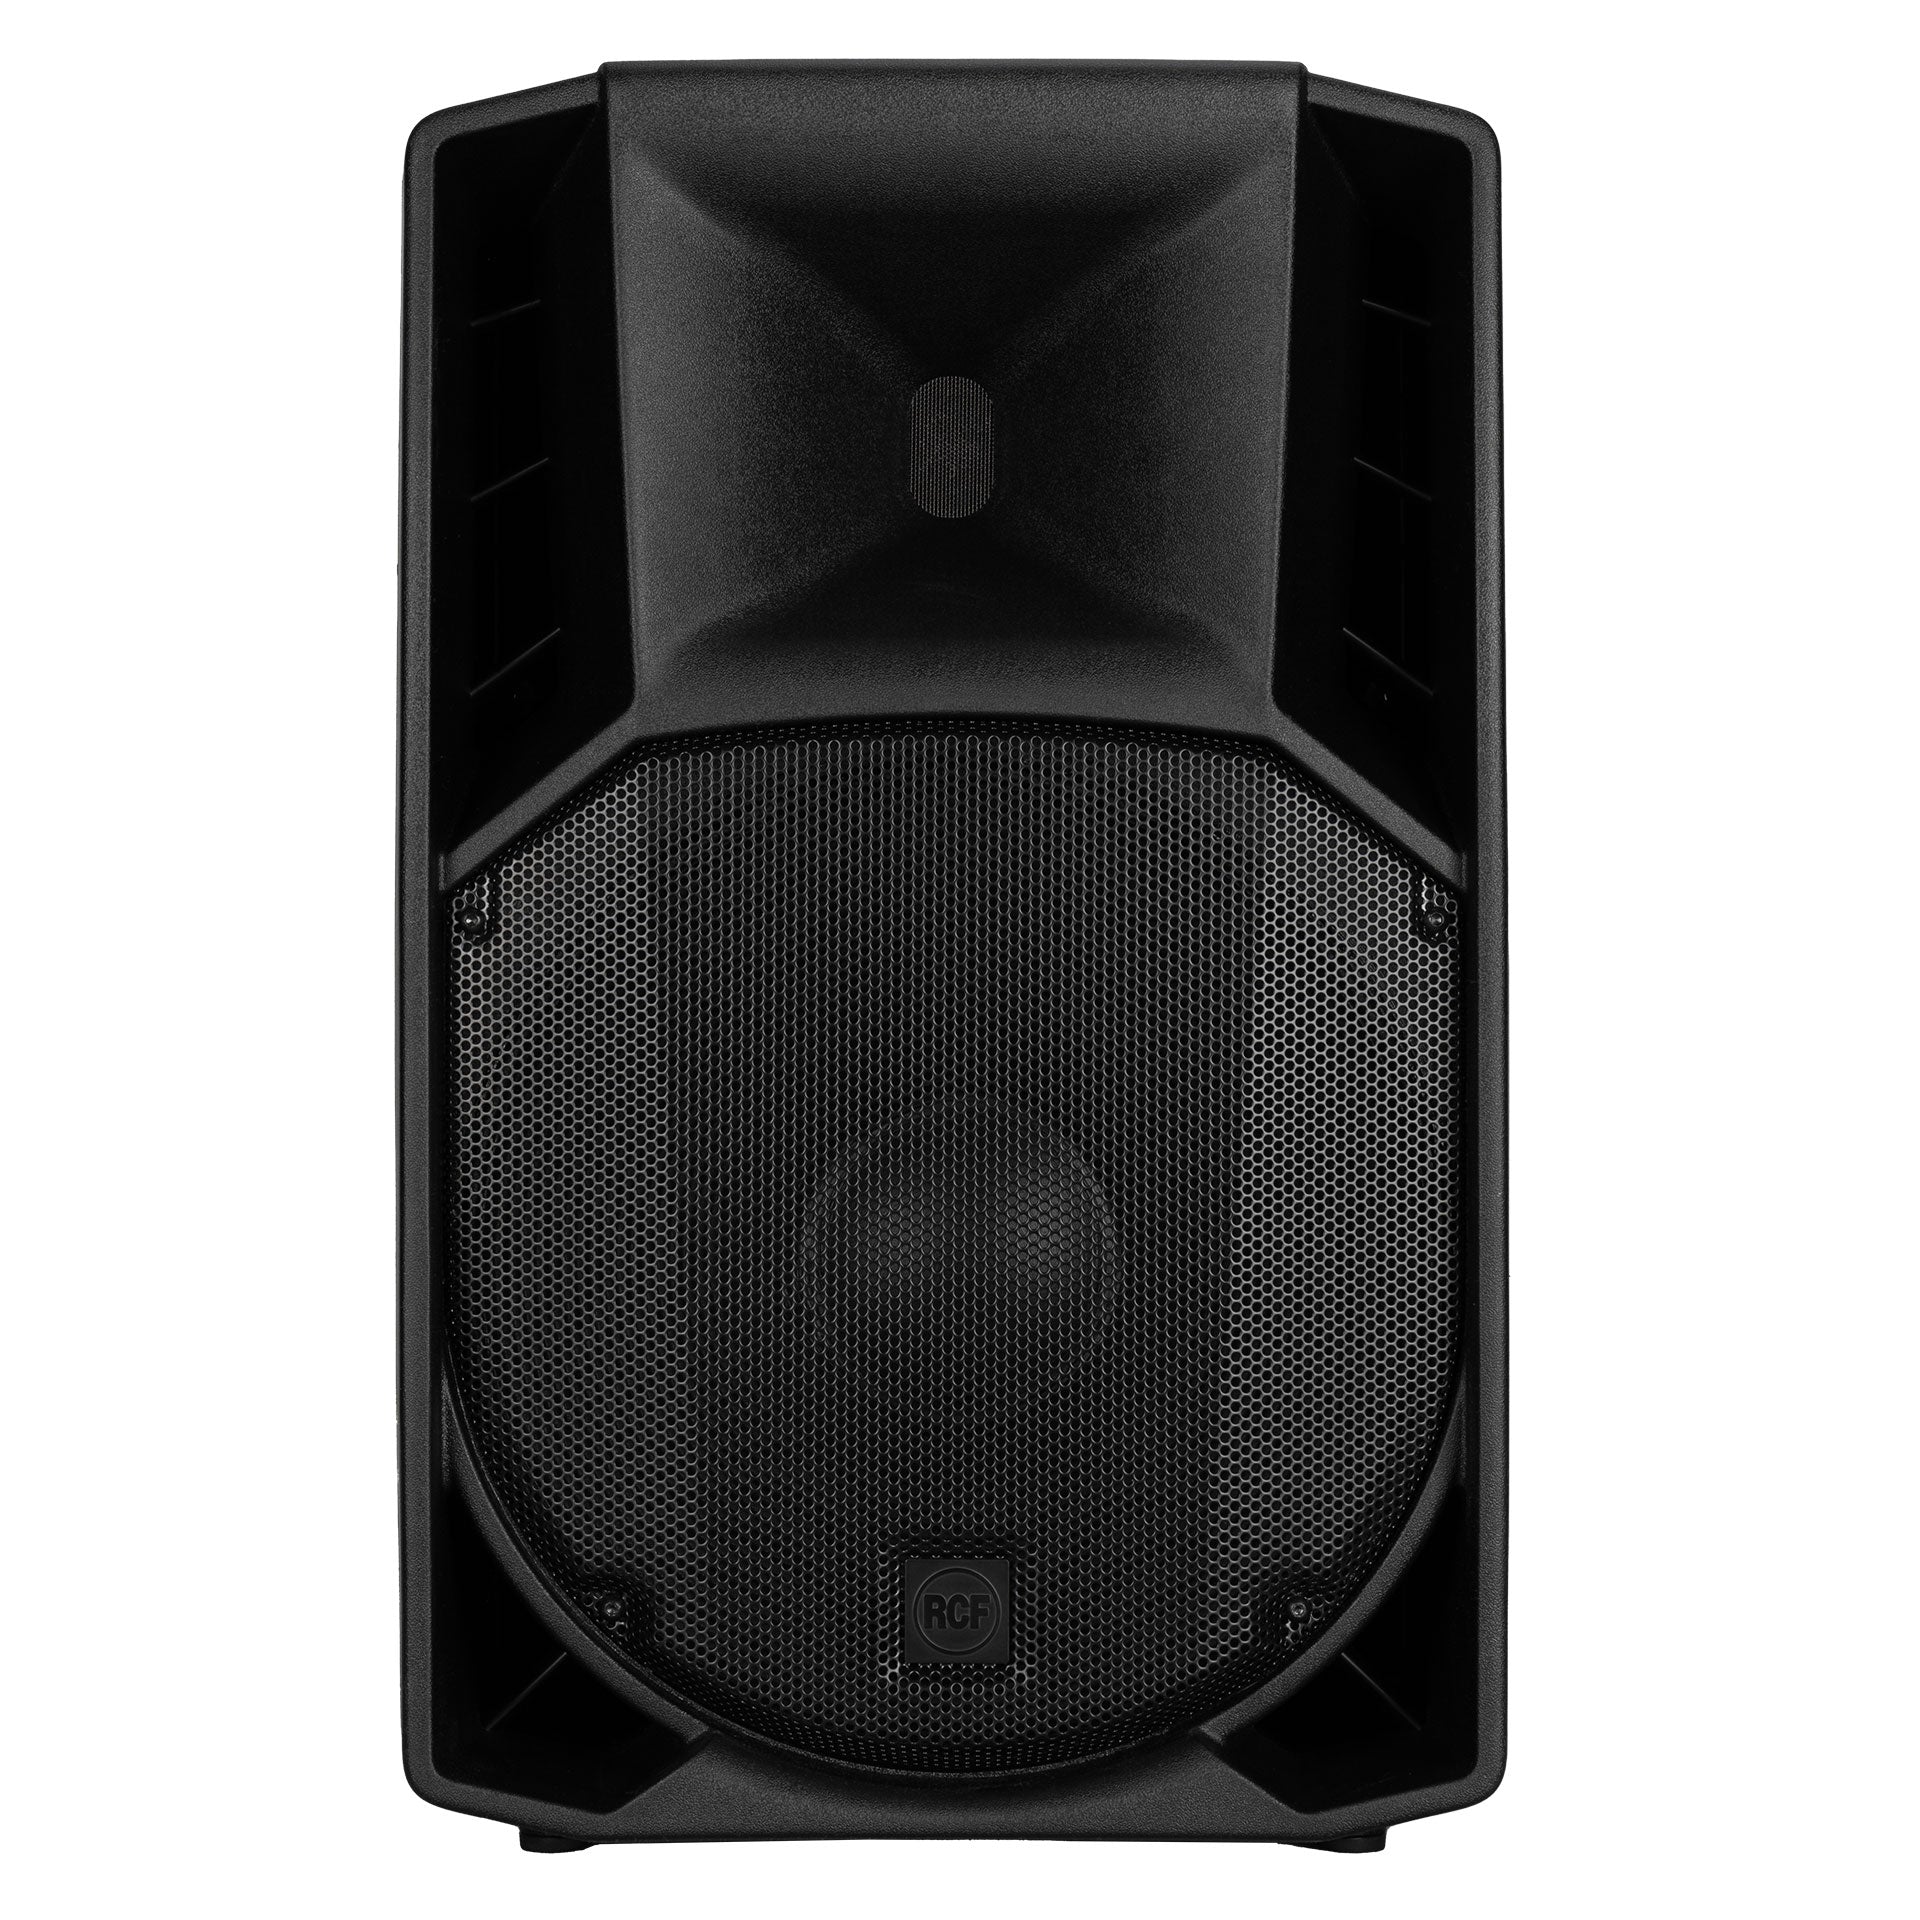 RCf Art 715-A MK5 Active 1,400W 15" Powered Speaker